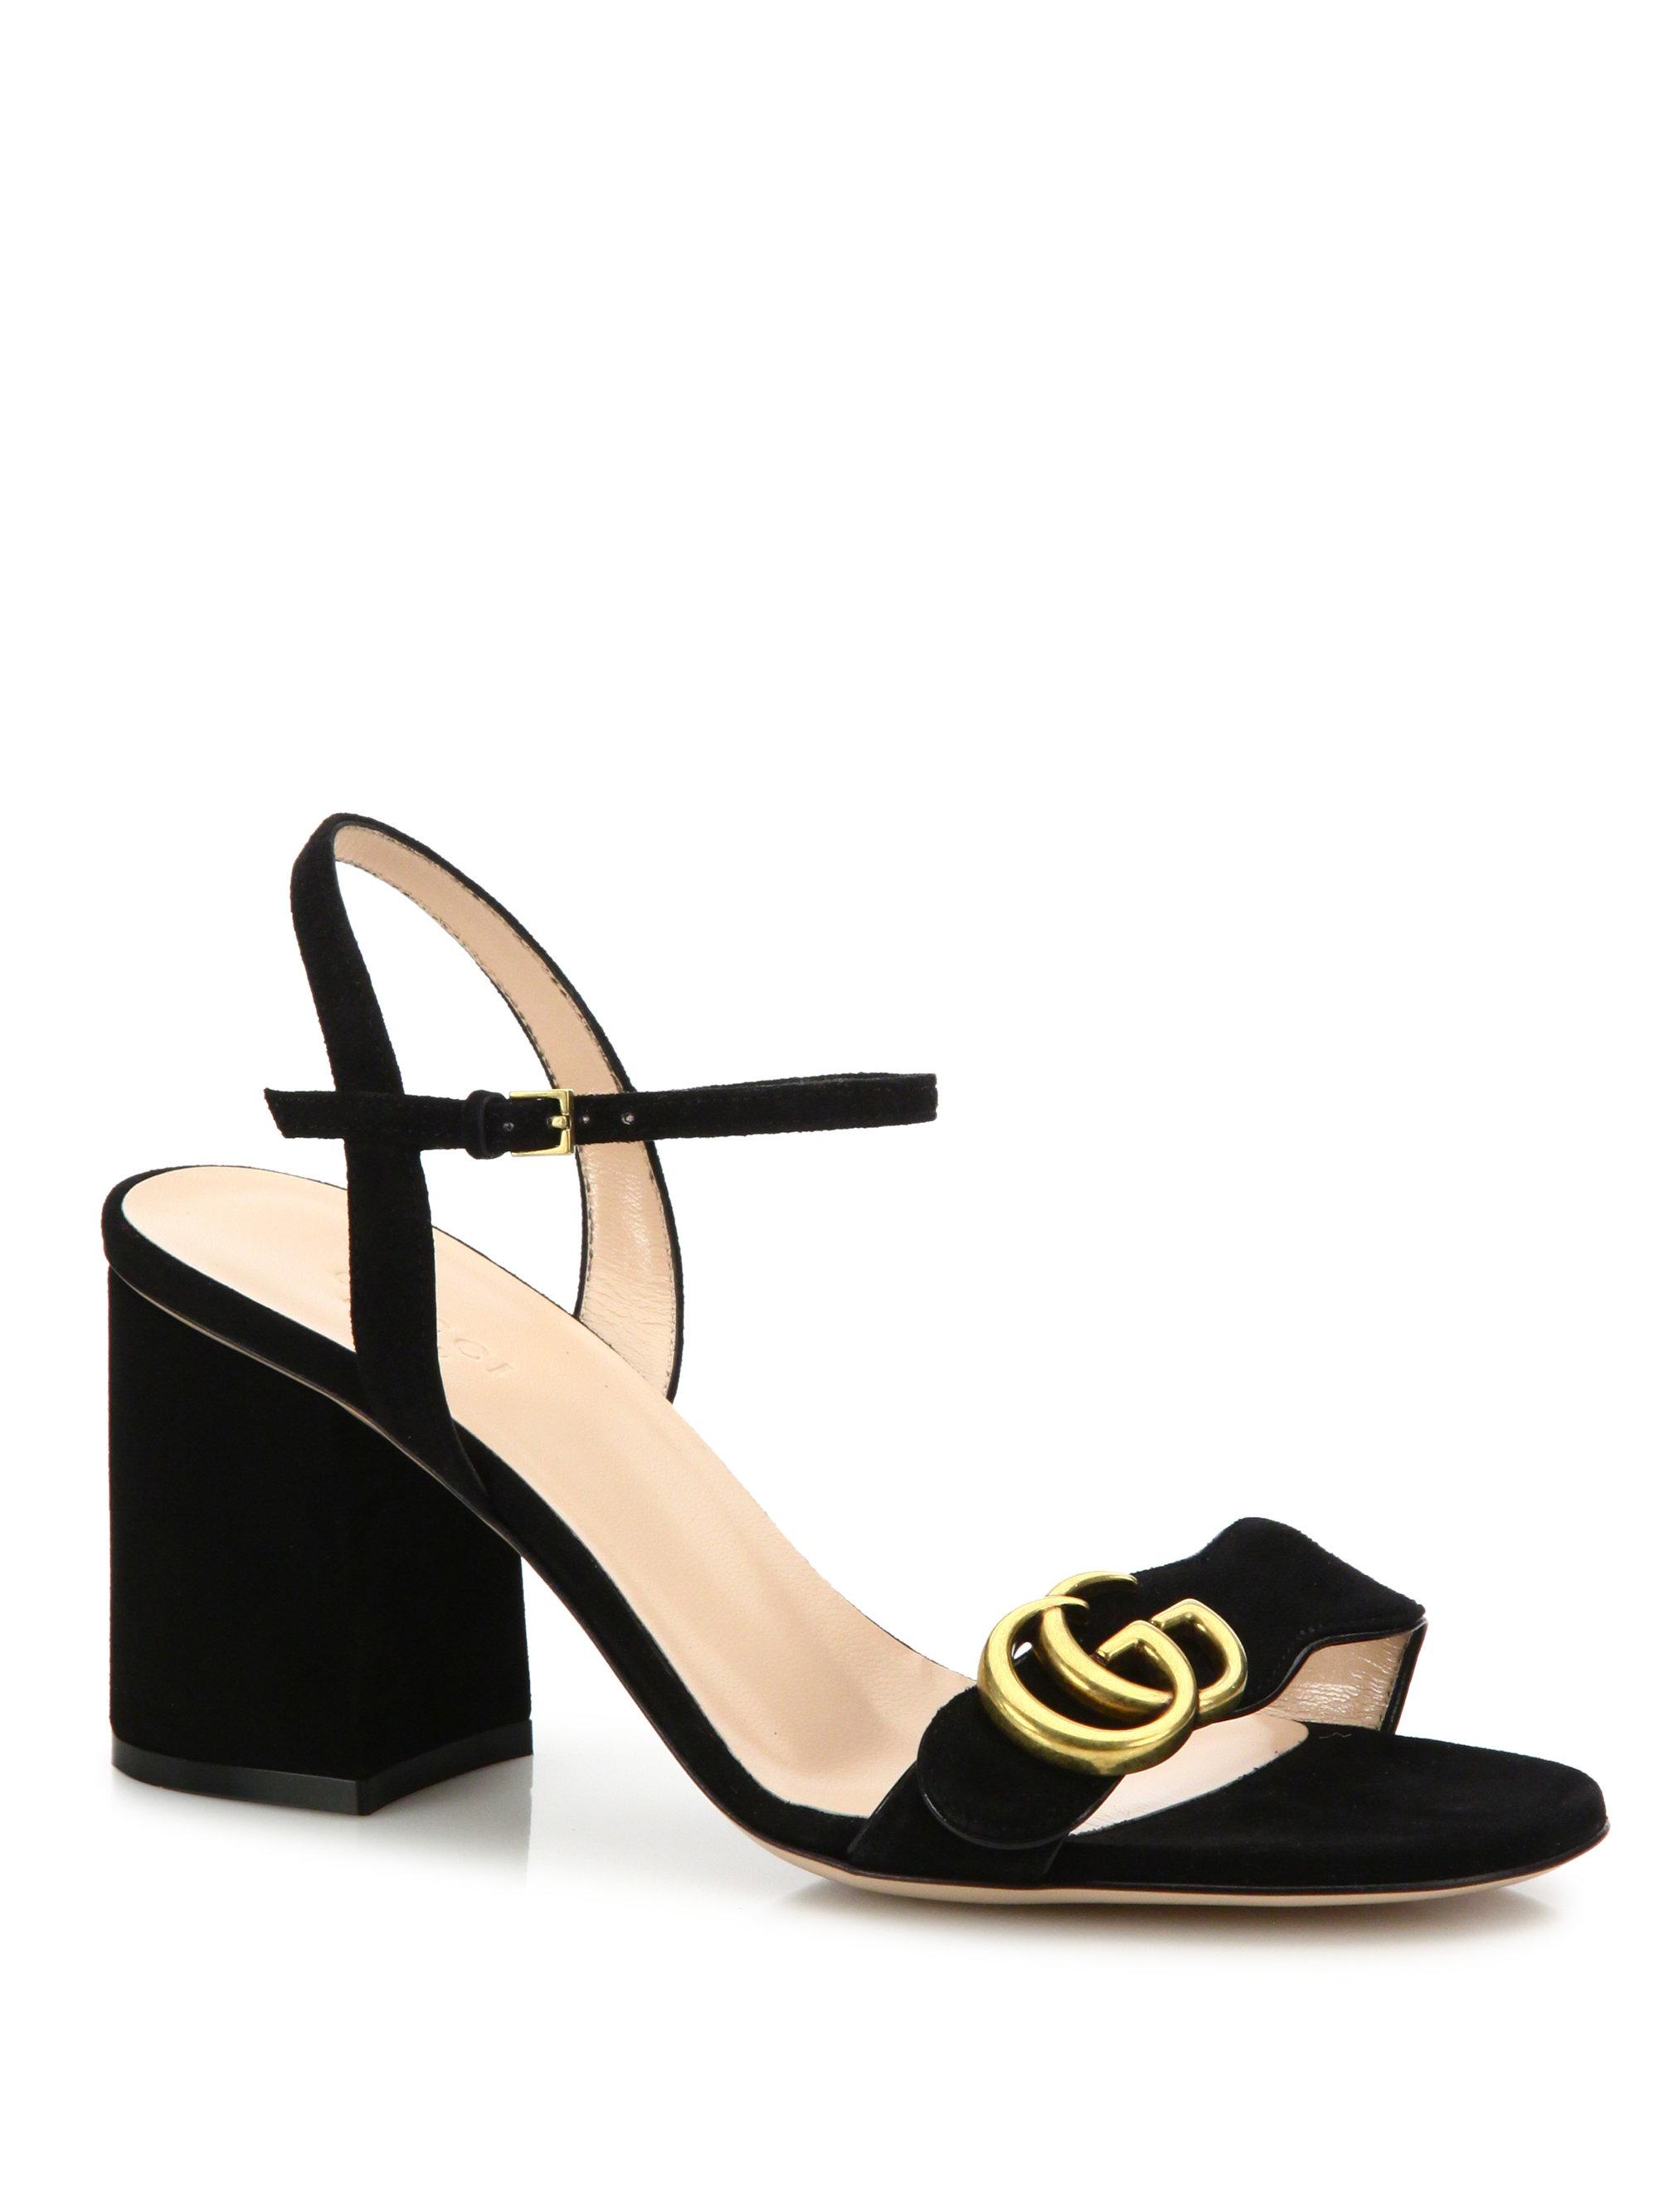 Gucci Marmont Suede Block-heel Sandals in Black | Lyst